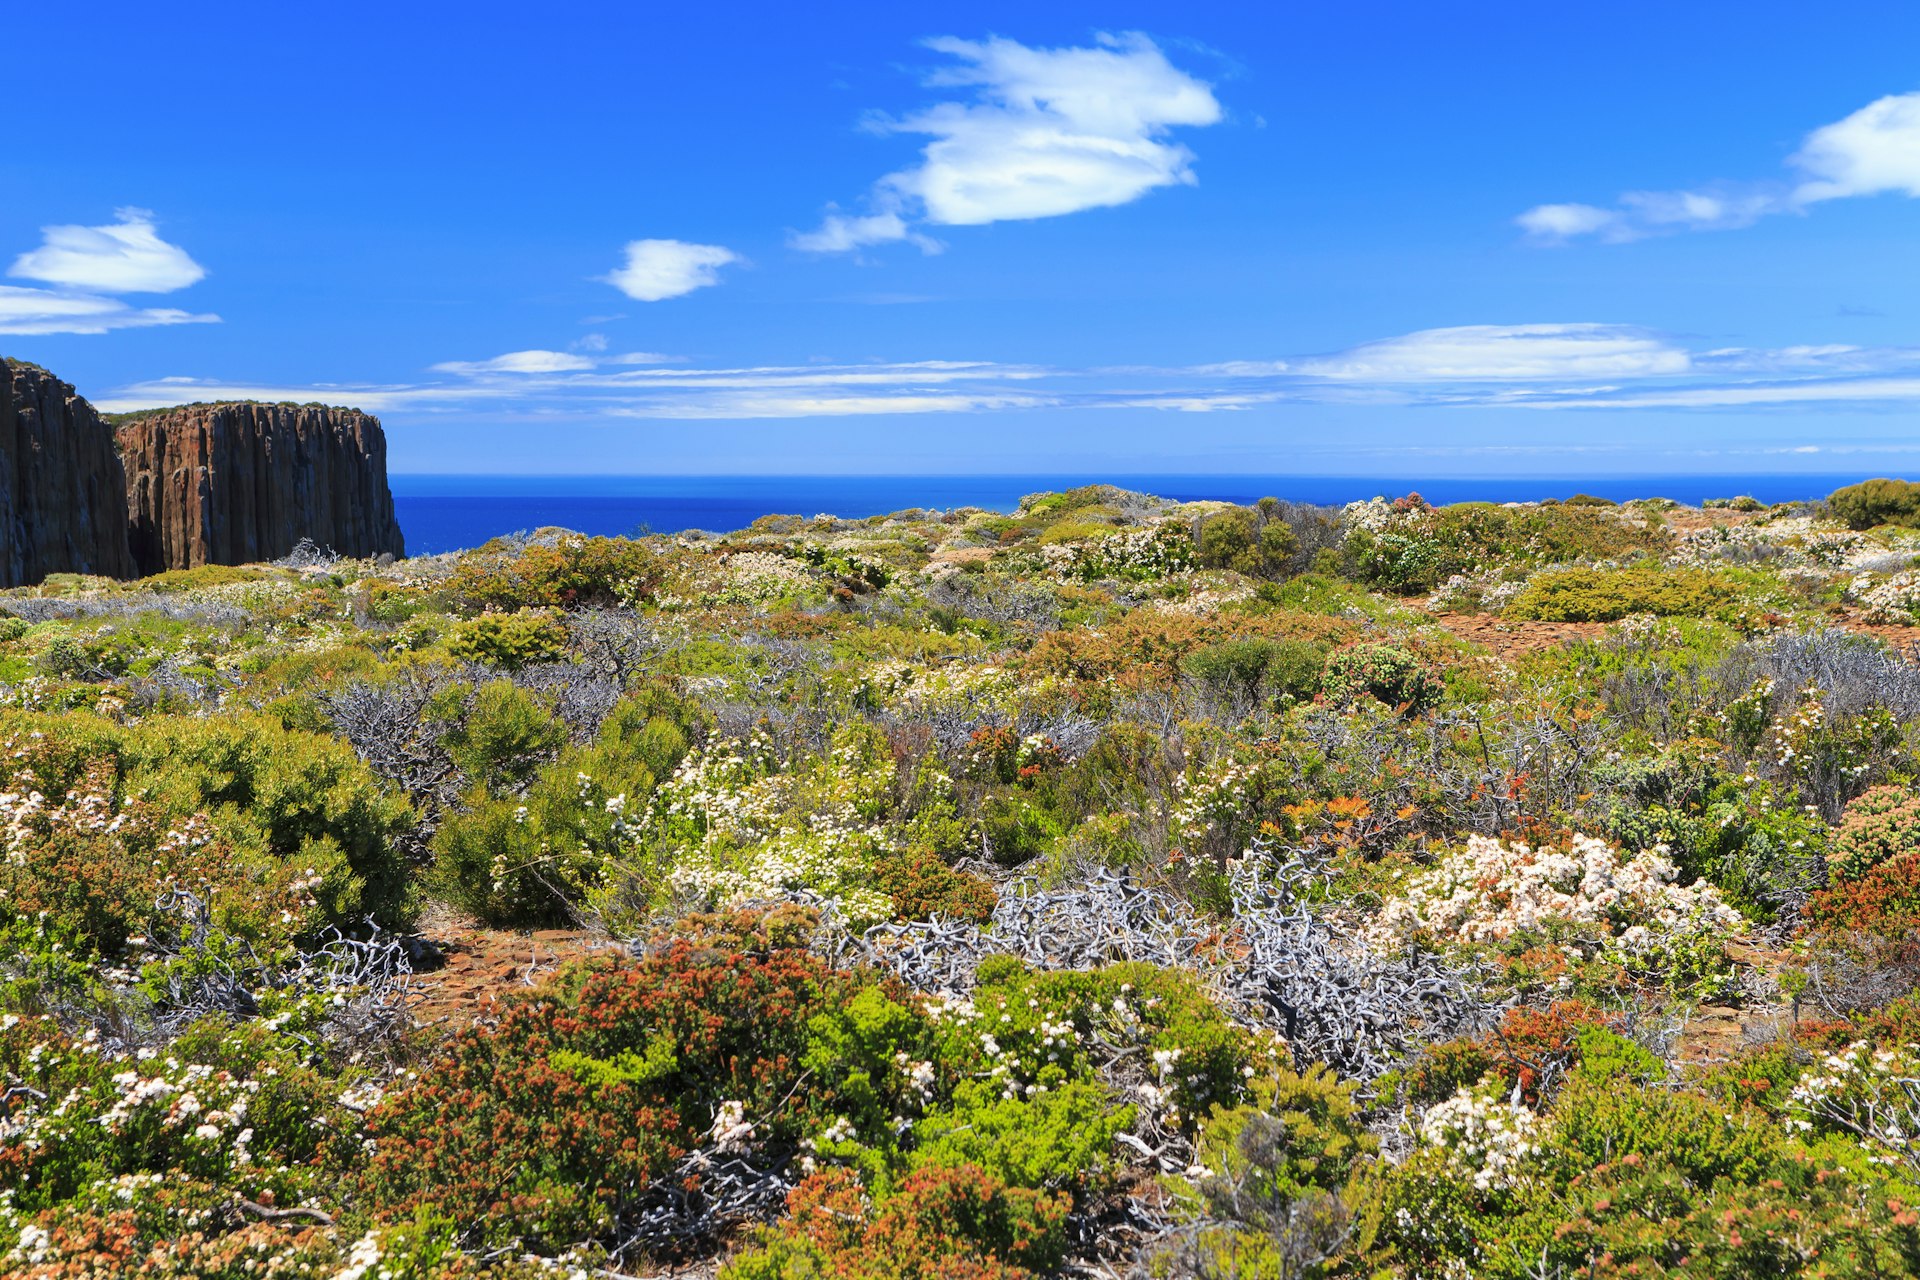 Orange, purple and white wildflowers stretch across a clifftop in Tasmania, Australia.